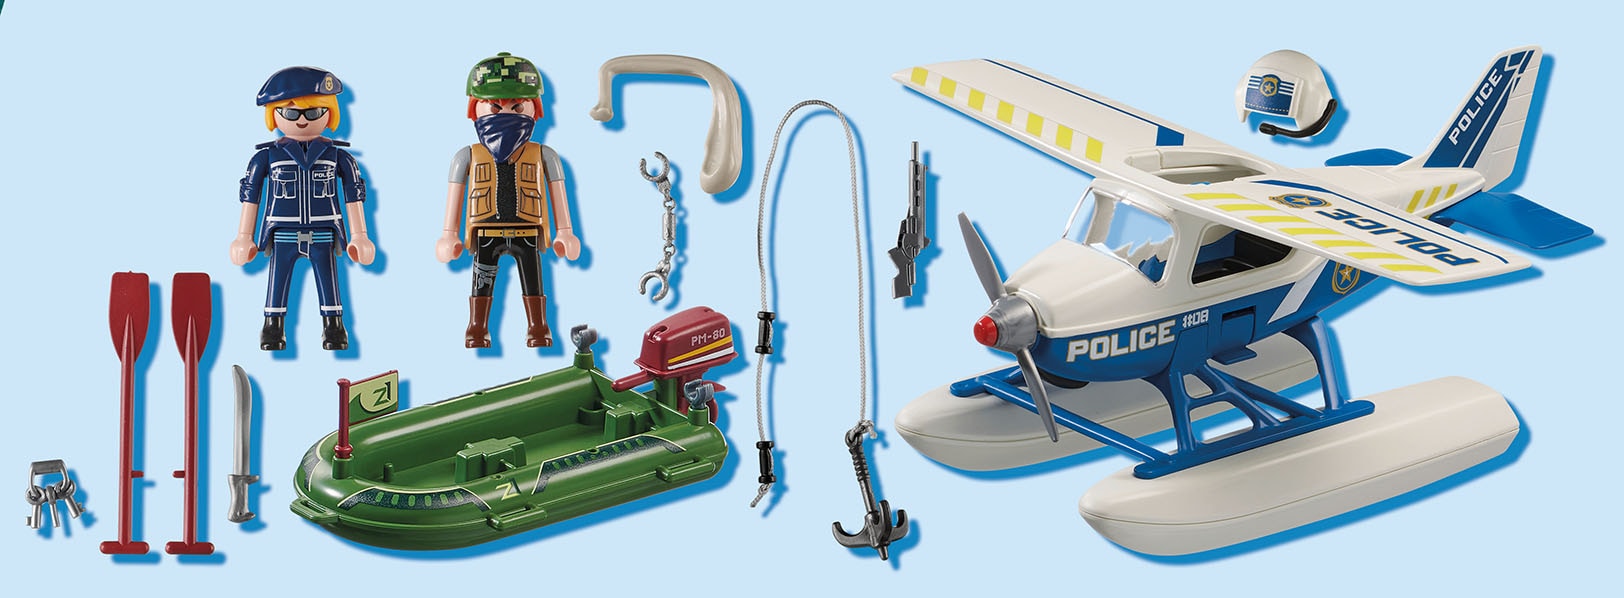 Playmobil® Konstruktions-Spielset »Polizei-Wasserflugzeug: Schmuggler-Verfolgung (70779), City Action«, (33 St.), Made in Germany